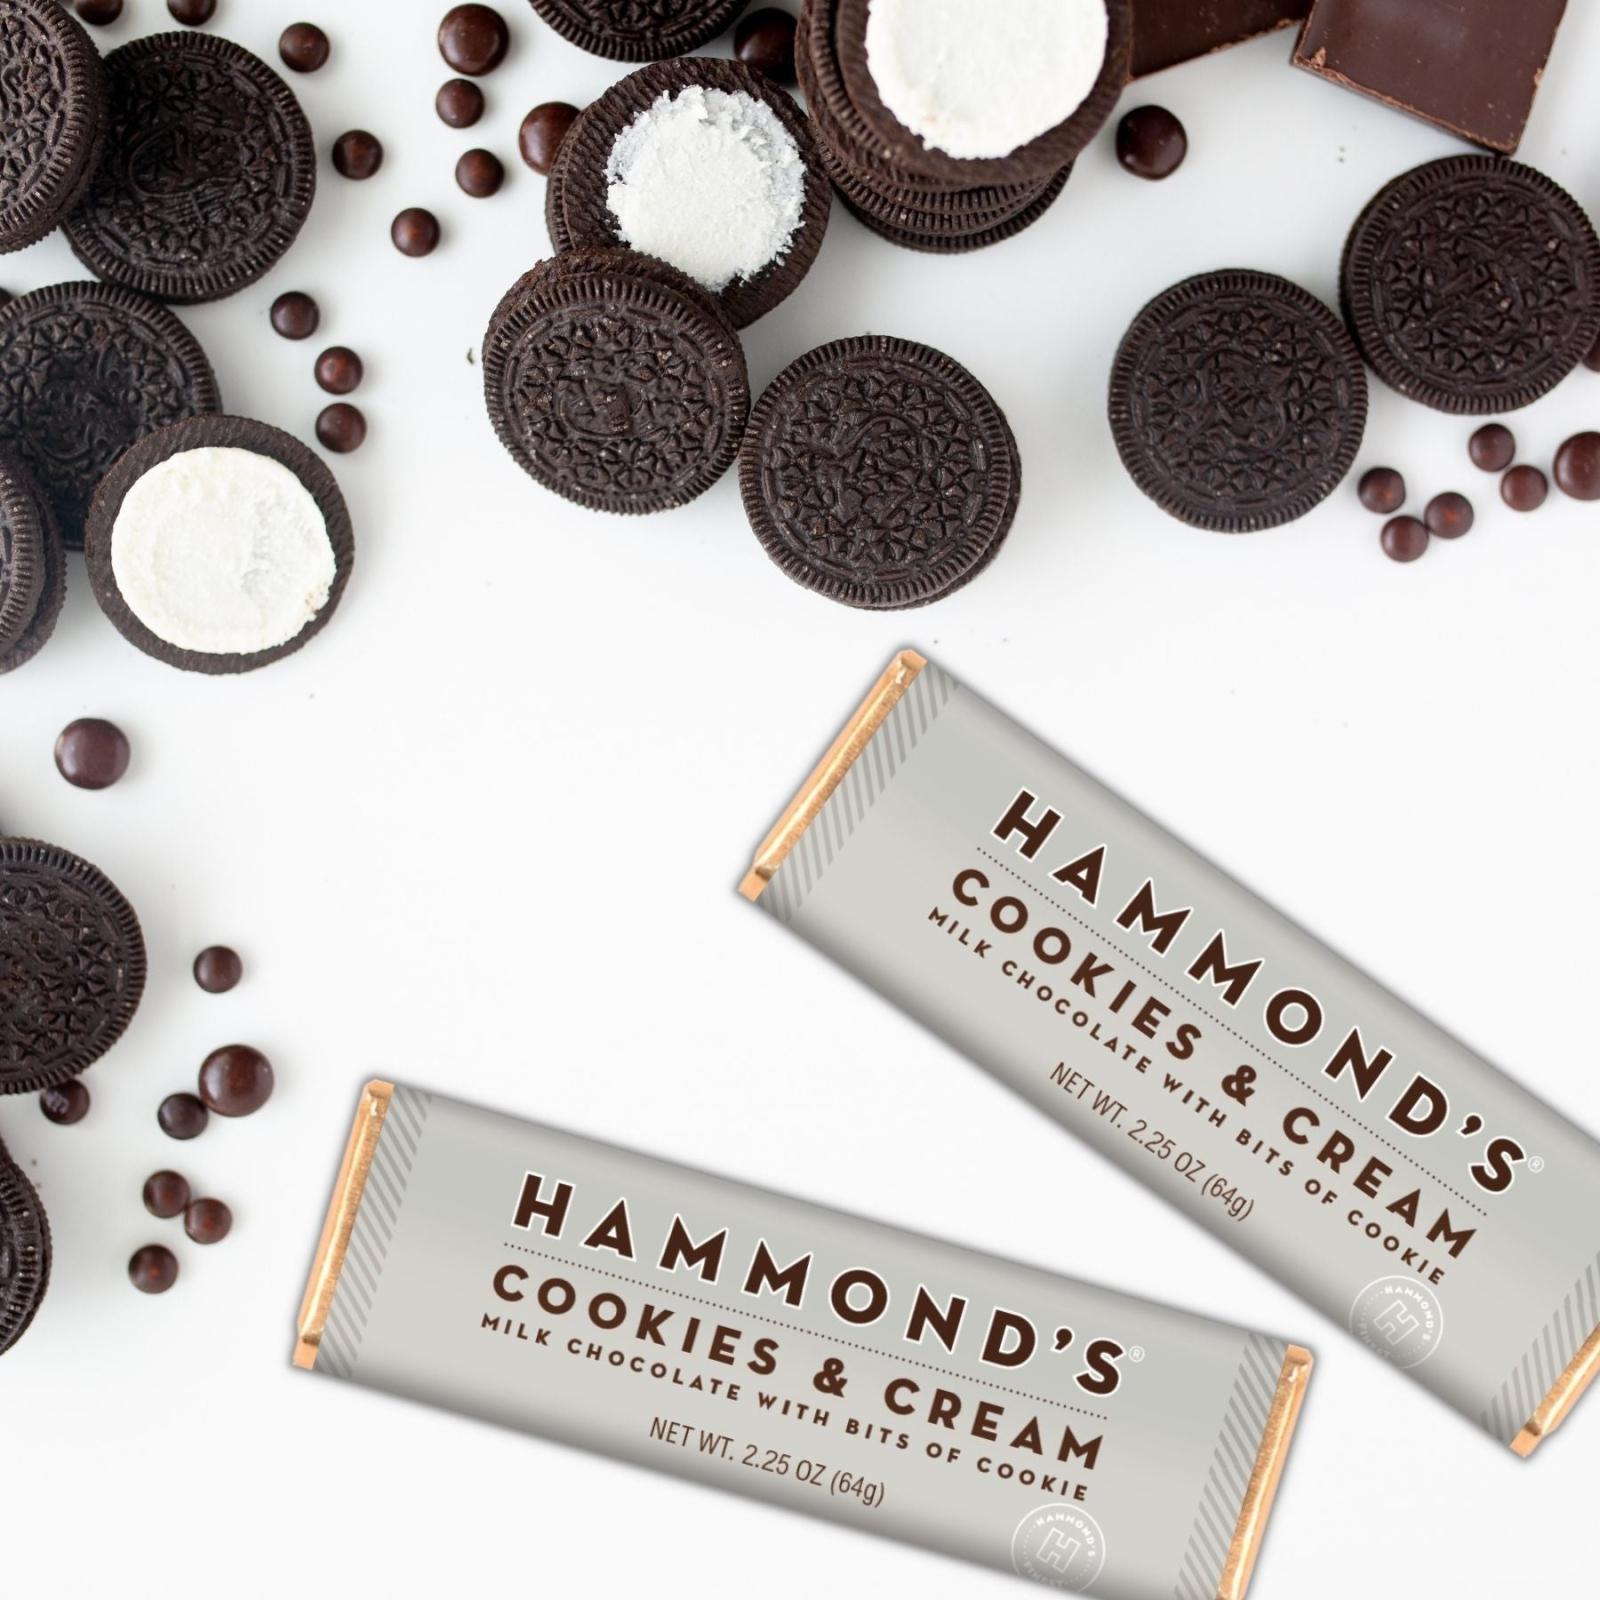 Hammond's Candies Cookies & Cream Milk Chocolate Bar